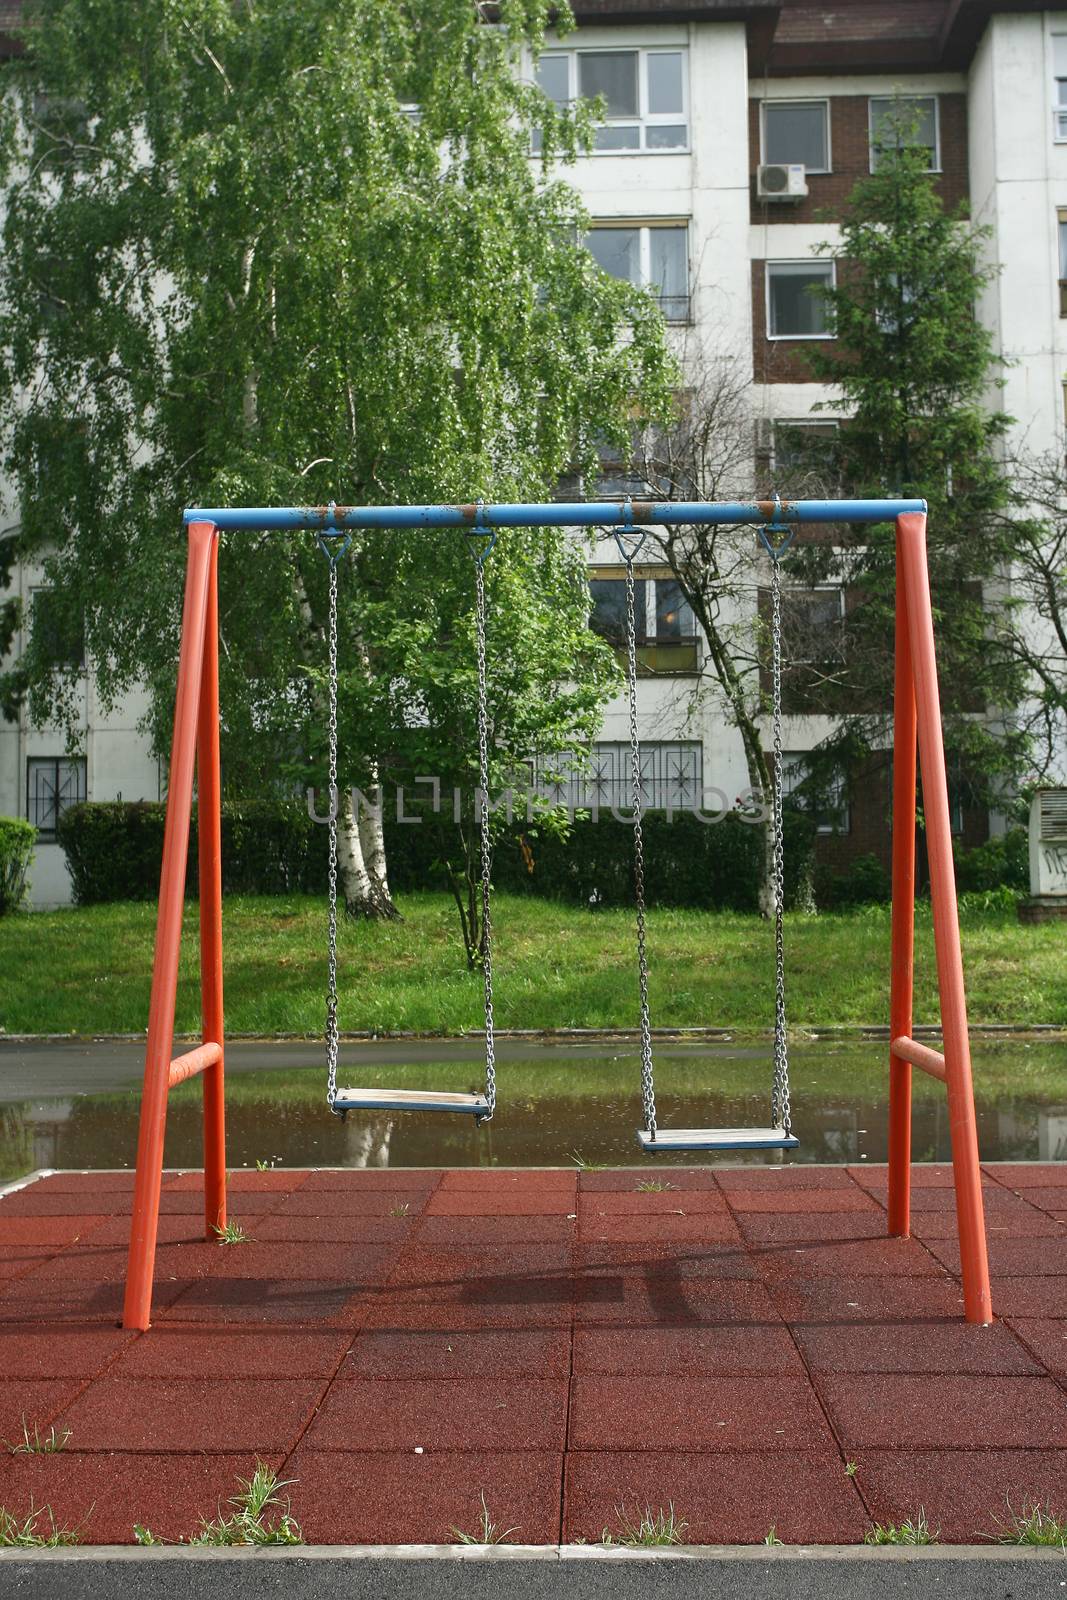 playground children's child chain swings on summer kids playgrou by nemar74